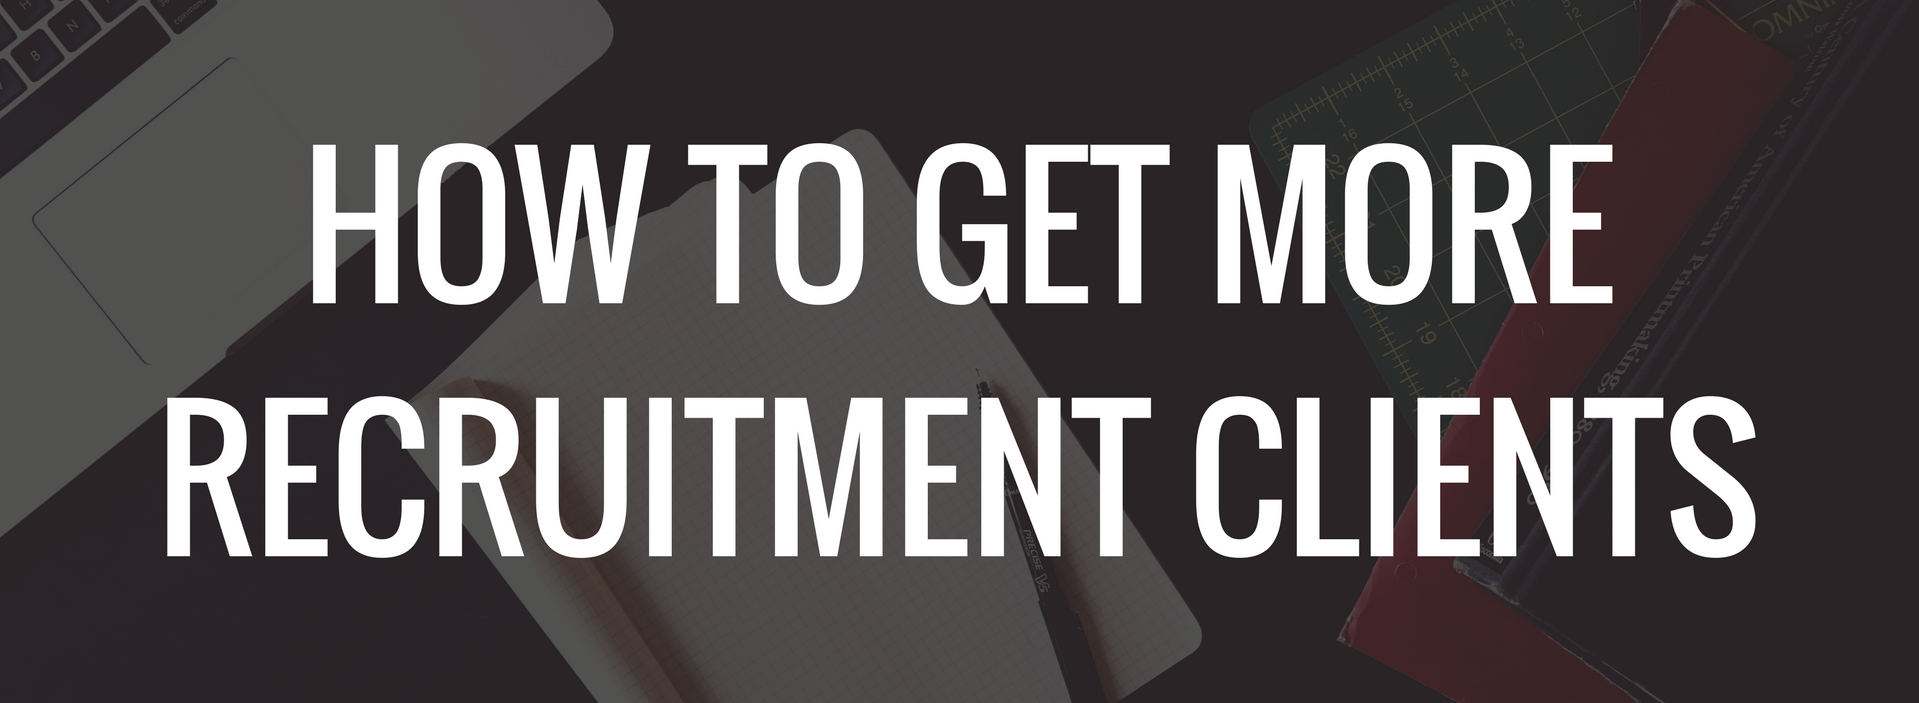 Find More Recruitment Clients